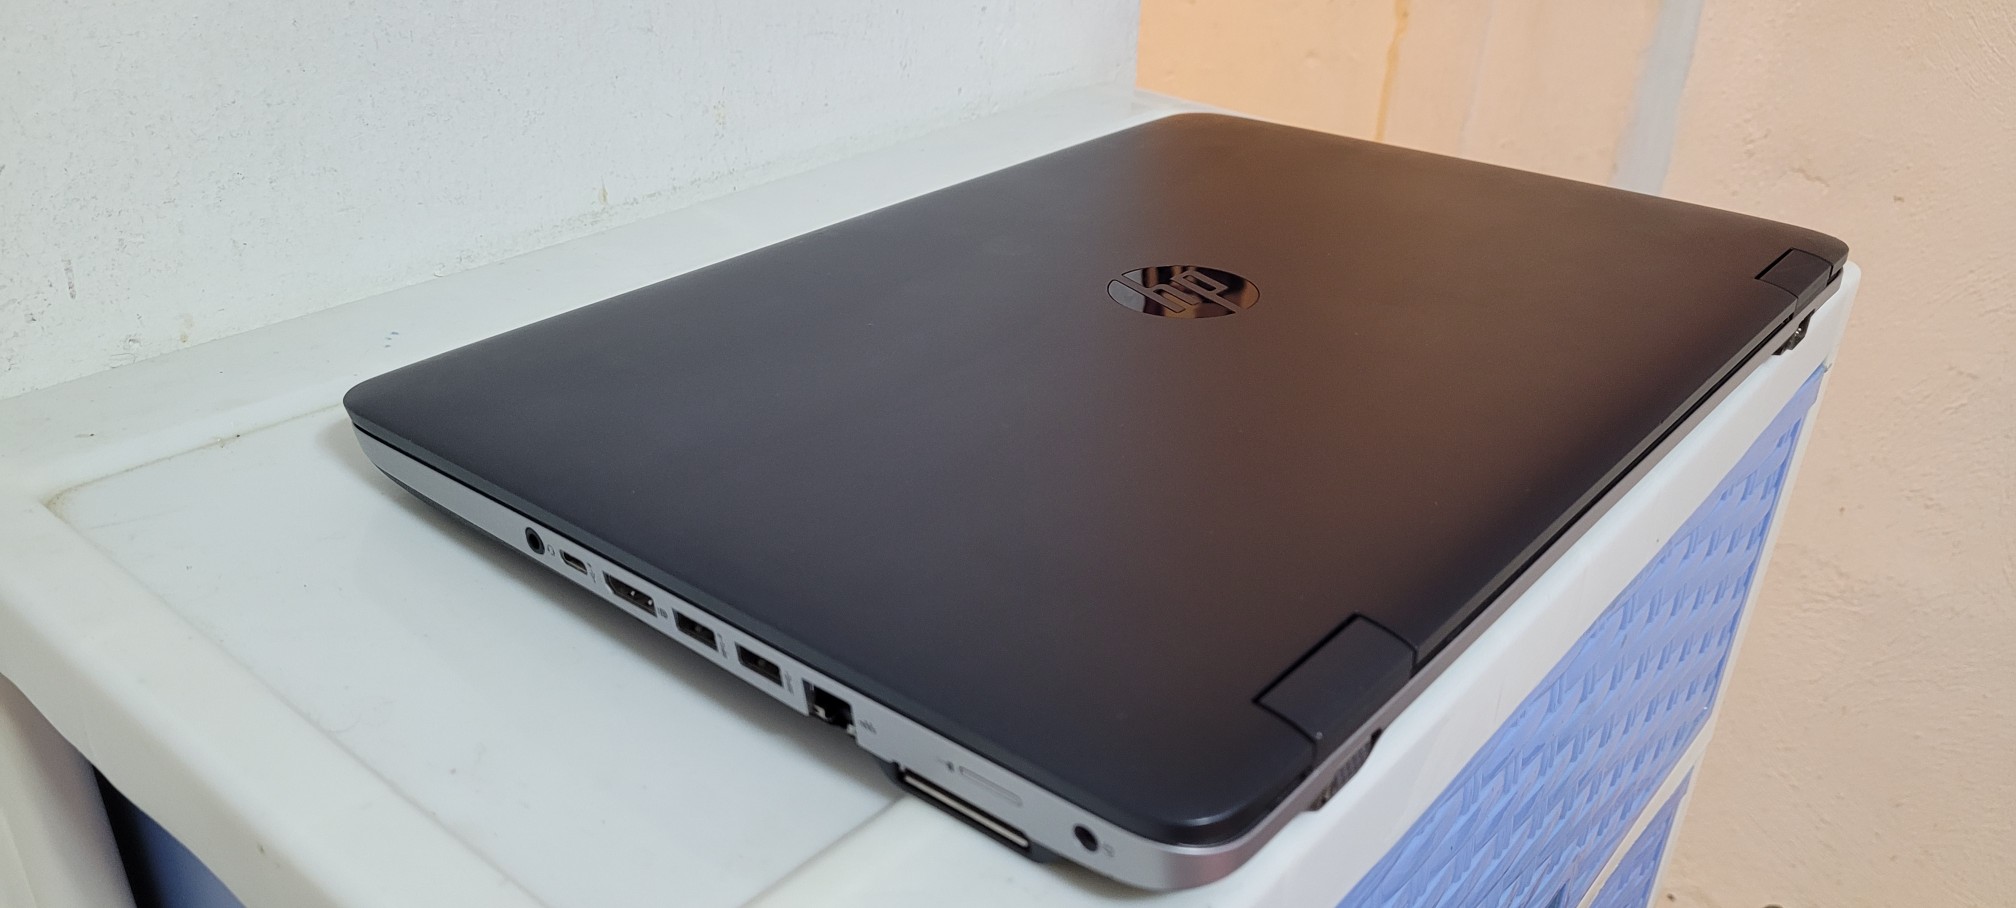 computadoras y laptops - Laptop hp G2 17 Pulg Core i5 6ta Ram 8gb ddr4 Disco 256gb SSD Solido hdmi full 2